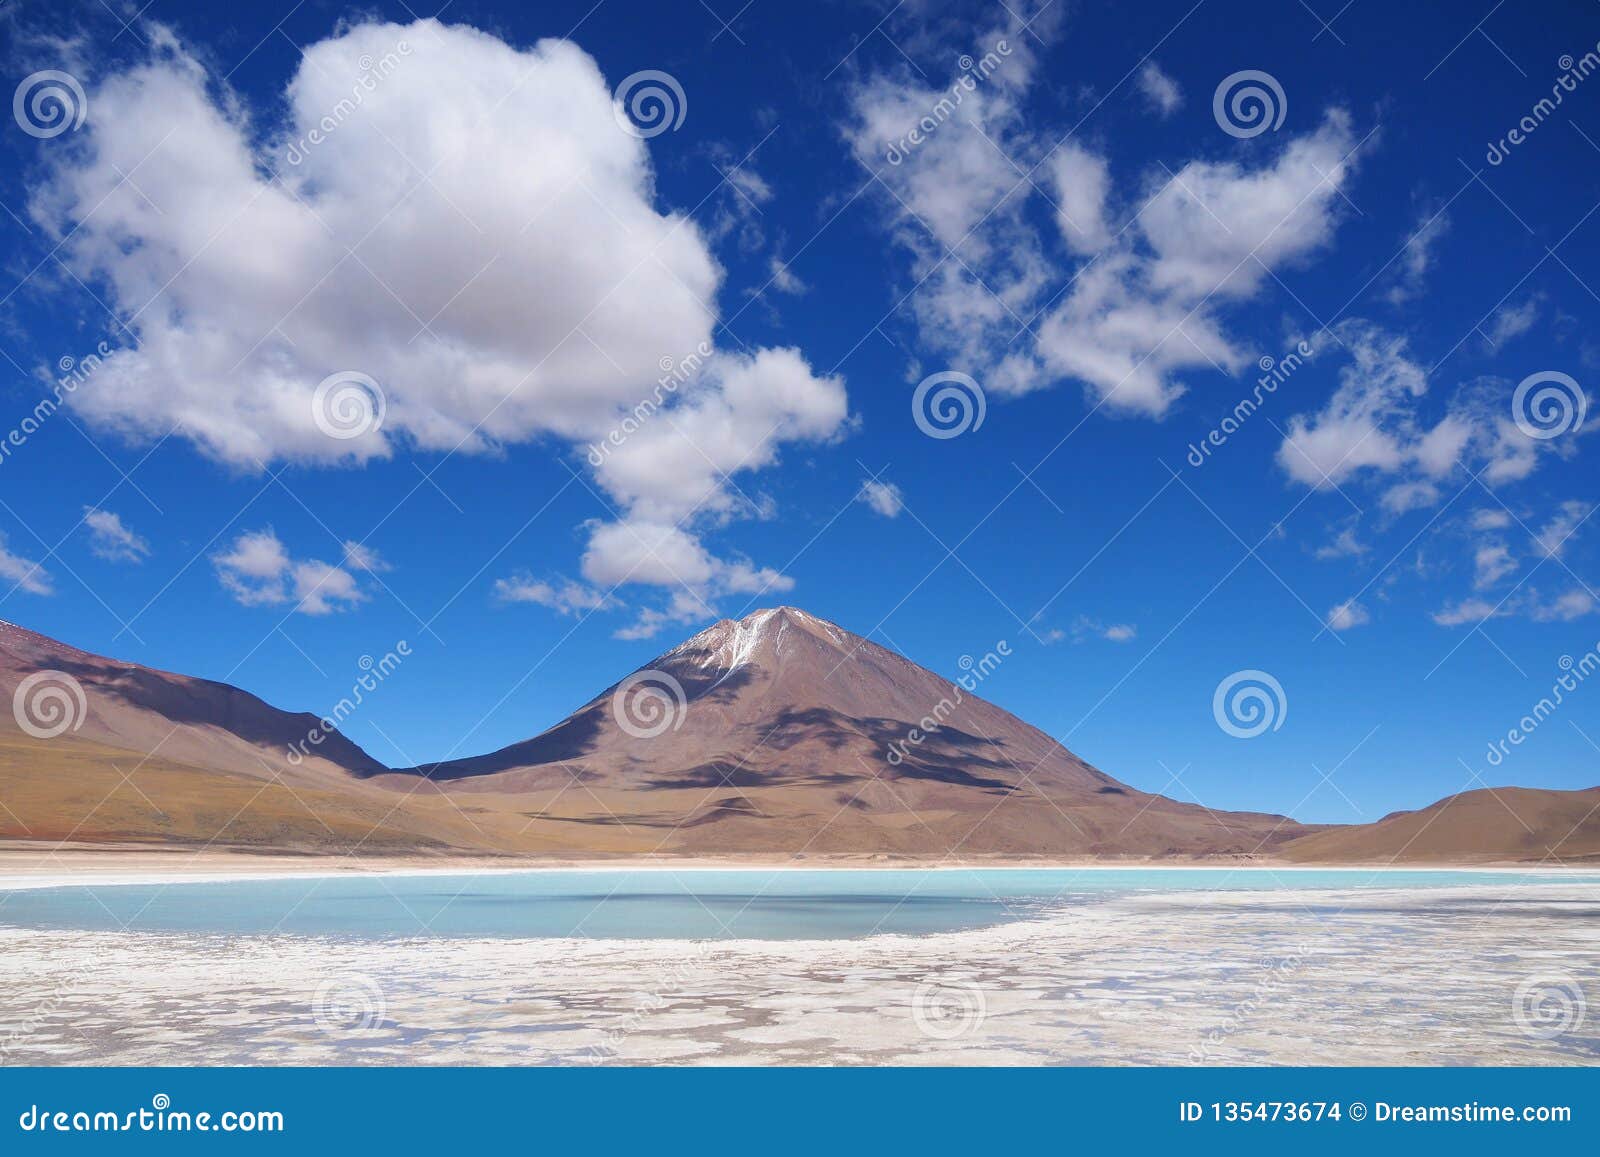 laguna verde in bolivia with scenic clouds